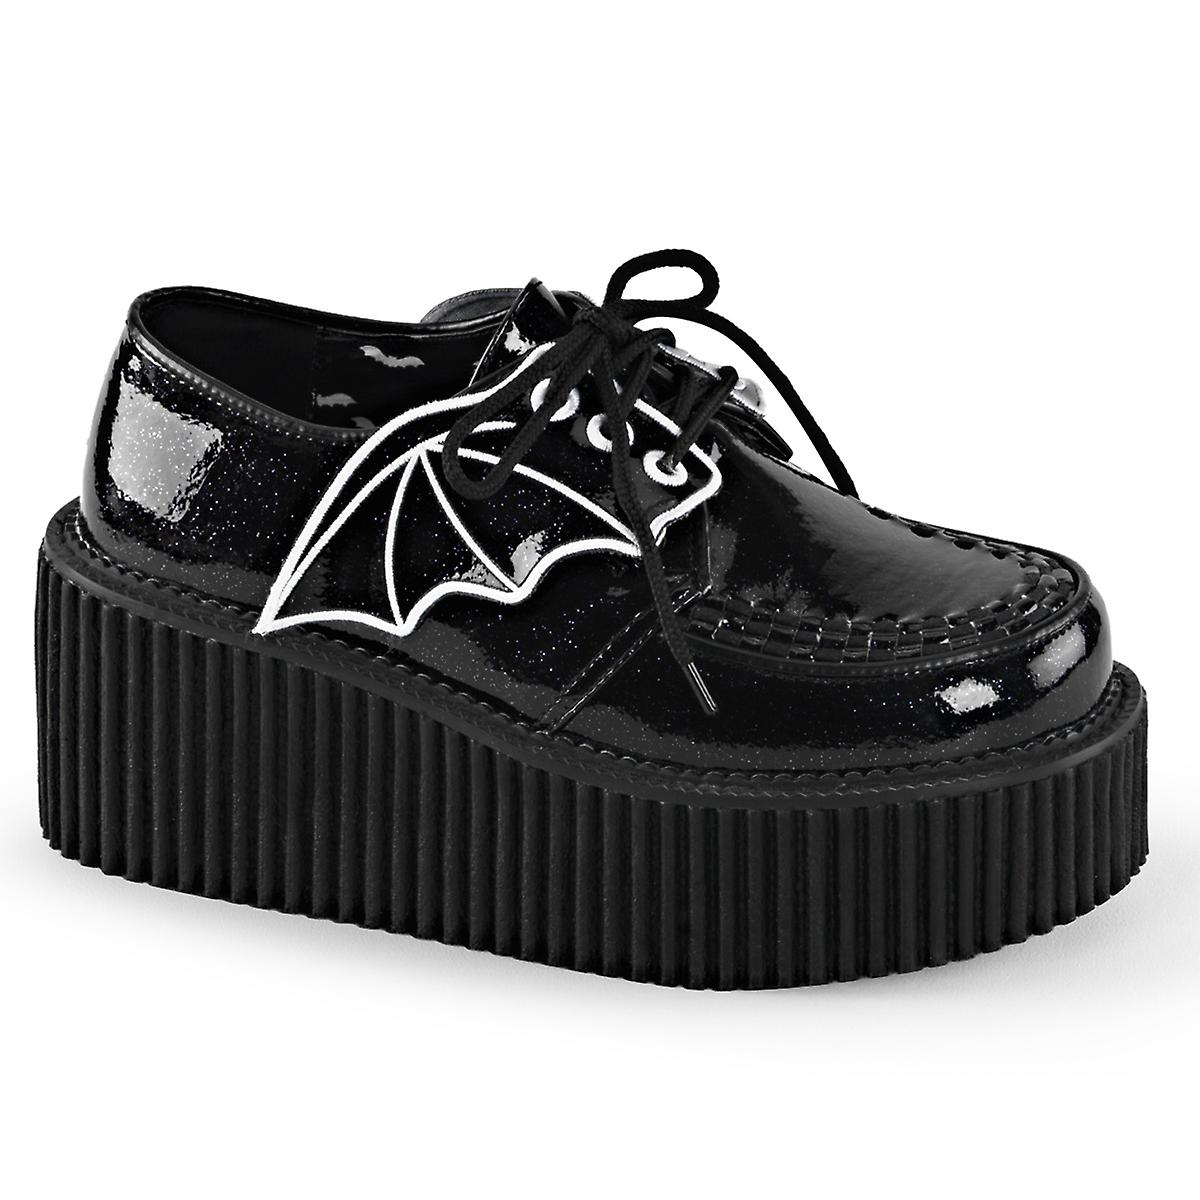 Demonia 205 Shoes Black Glitter | Mall